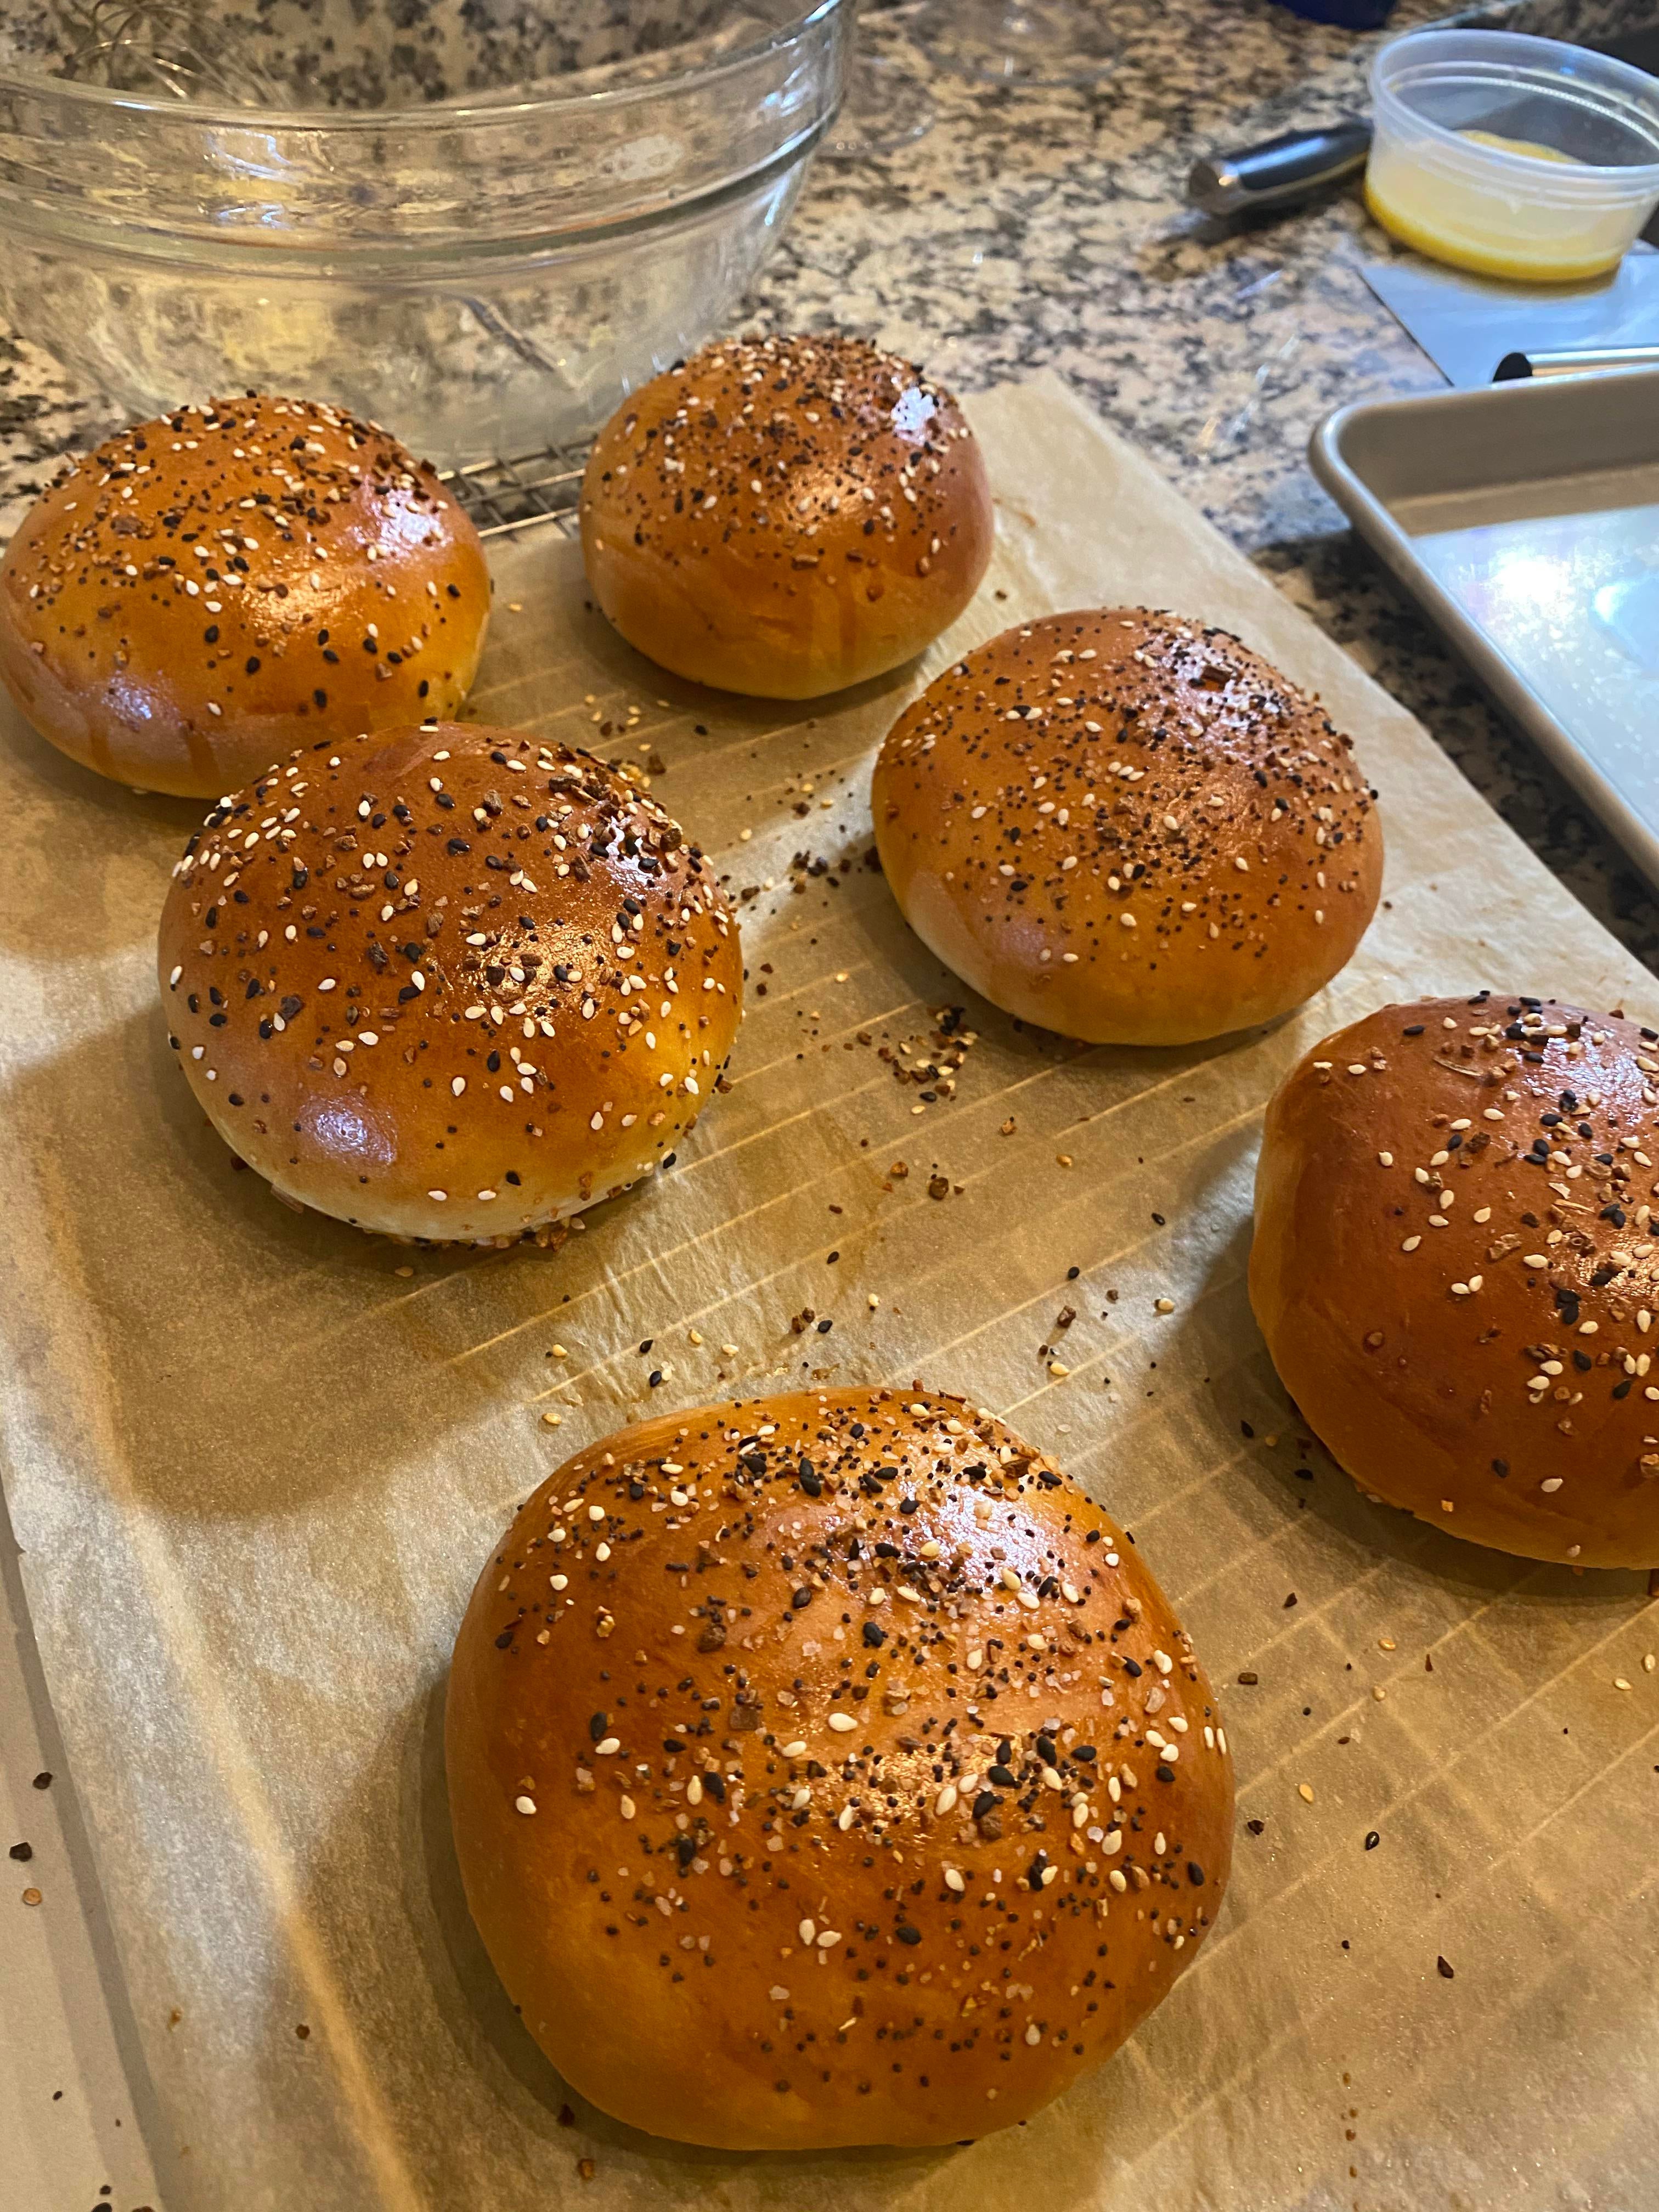 Made Joshua Weissman’s bun recipe. Never buying buns again! - Dining